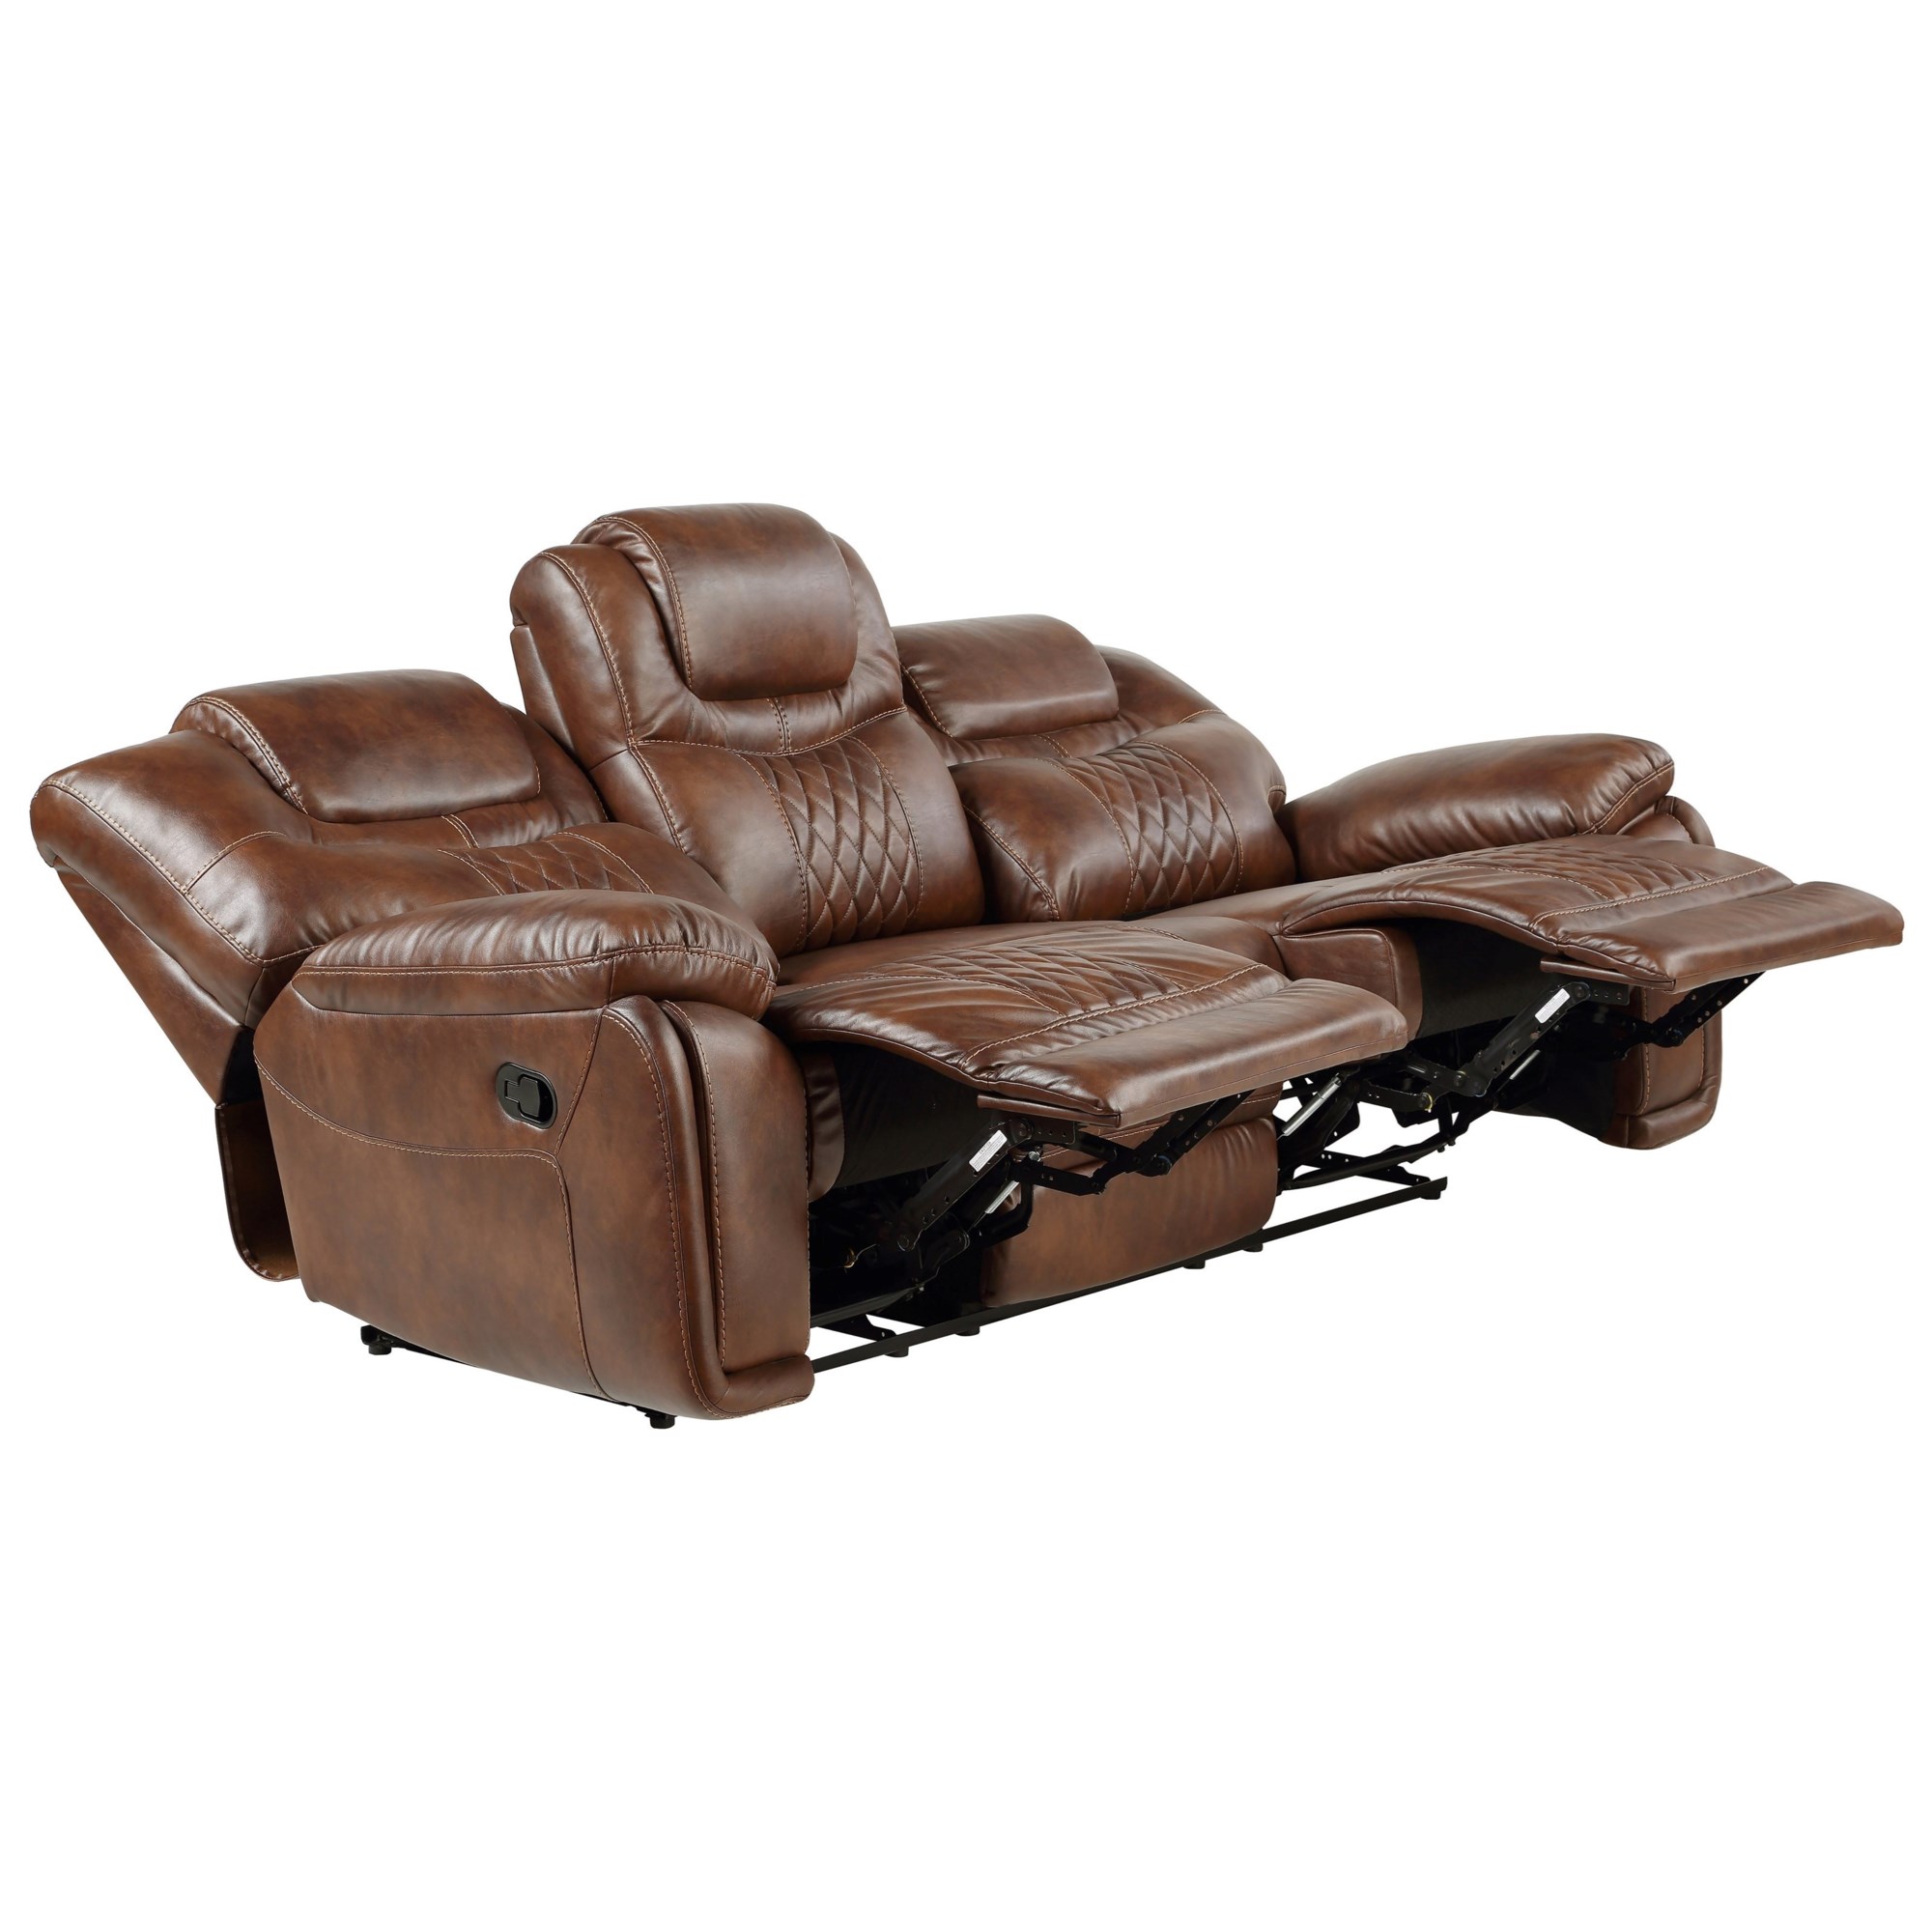 TYSON reclining armchair with ottoman